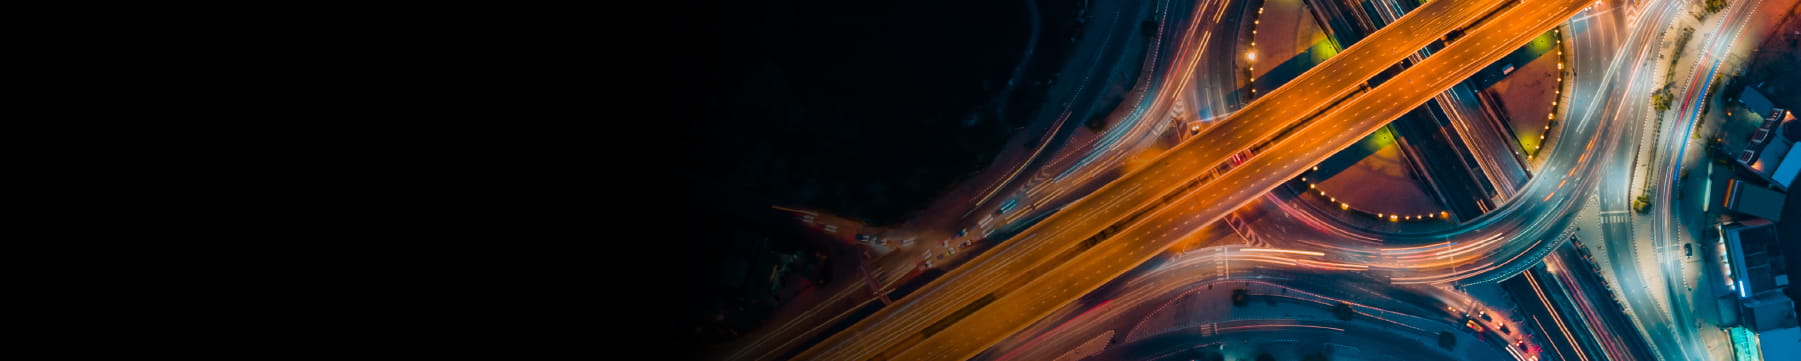 Aerial view of freeway interchange